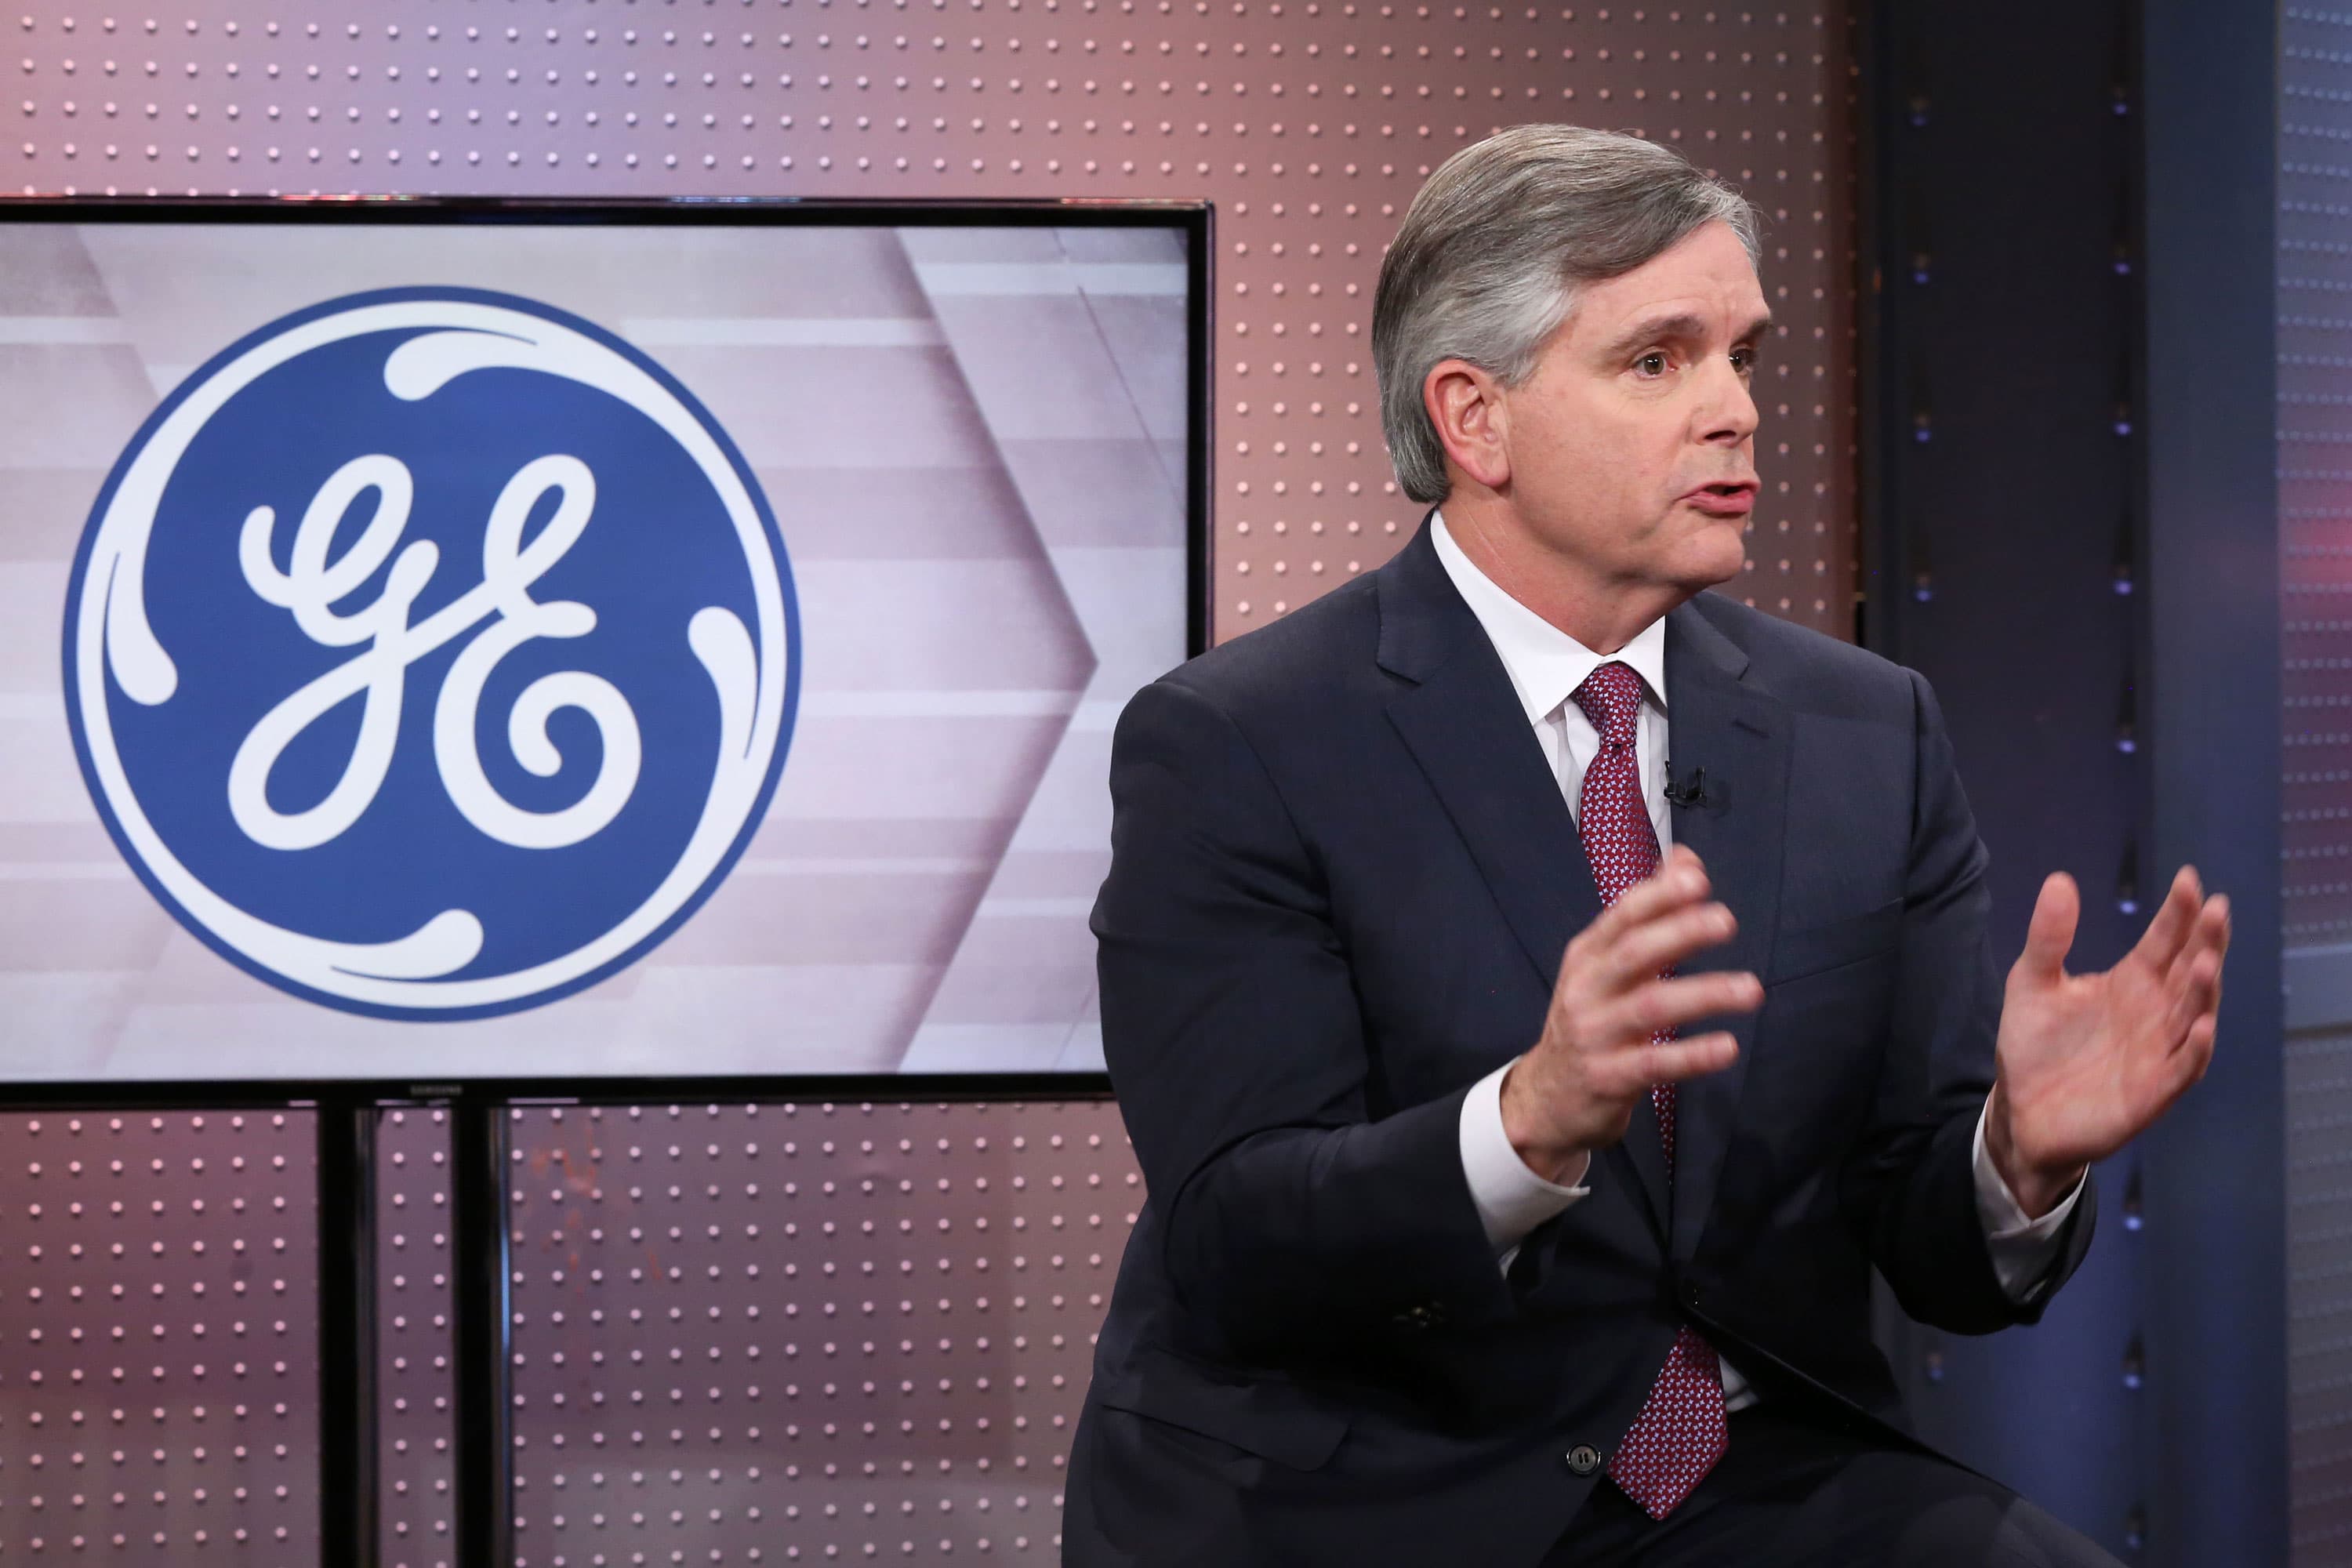 GE shares extend losses after sale of Gecas, Tusa warns JPMorgan of debt